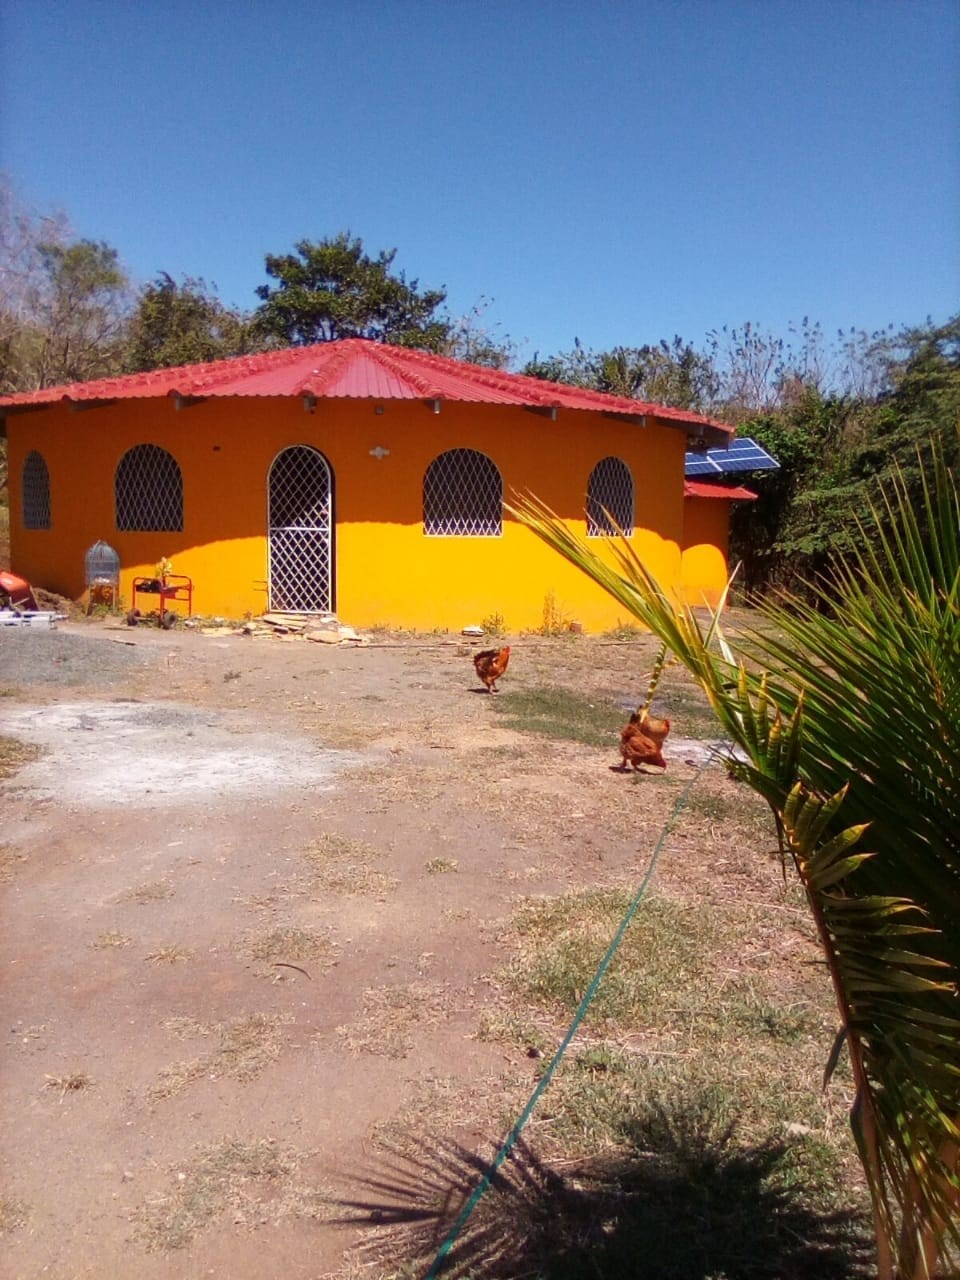 Nicaragua Real Estate dome home for sale in San Juan Del Sur